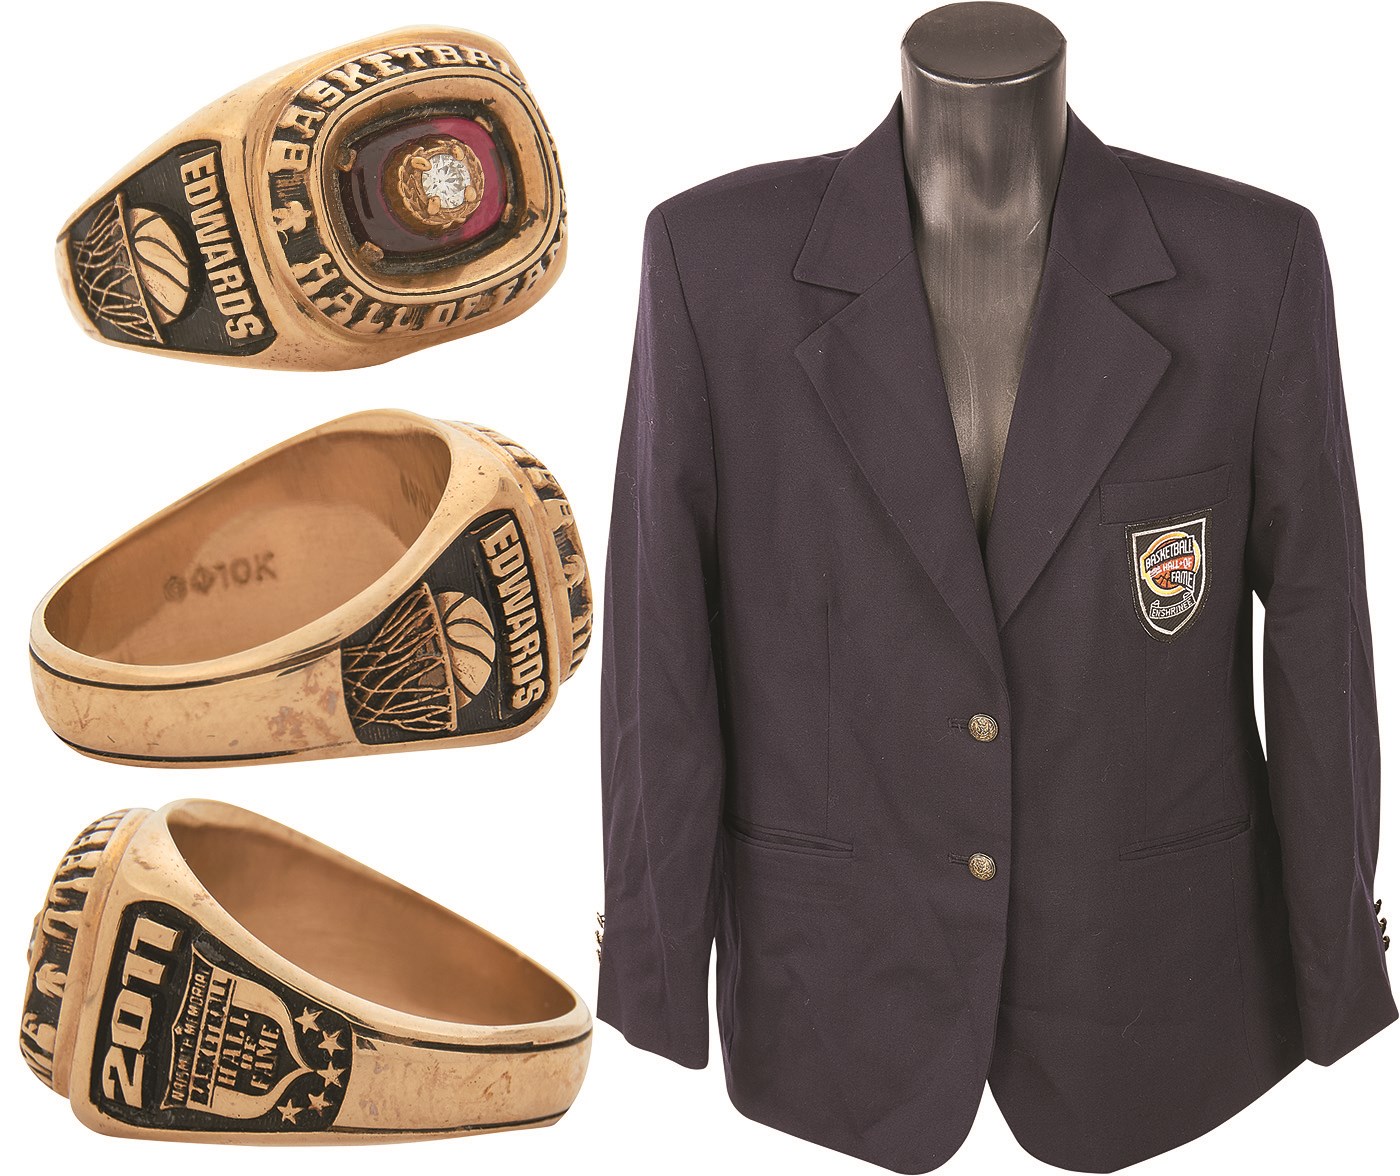 - 2011 Naismith Memorial Basketball Hall of Fame Ring & Jacket Presented to Teresa Edwards